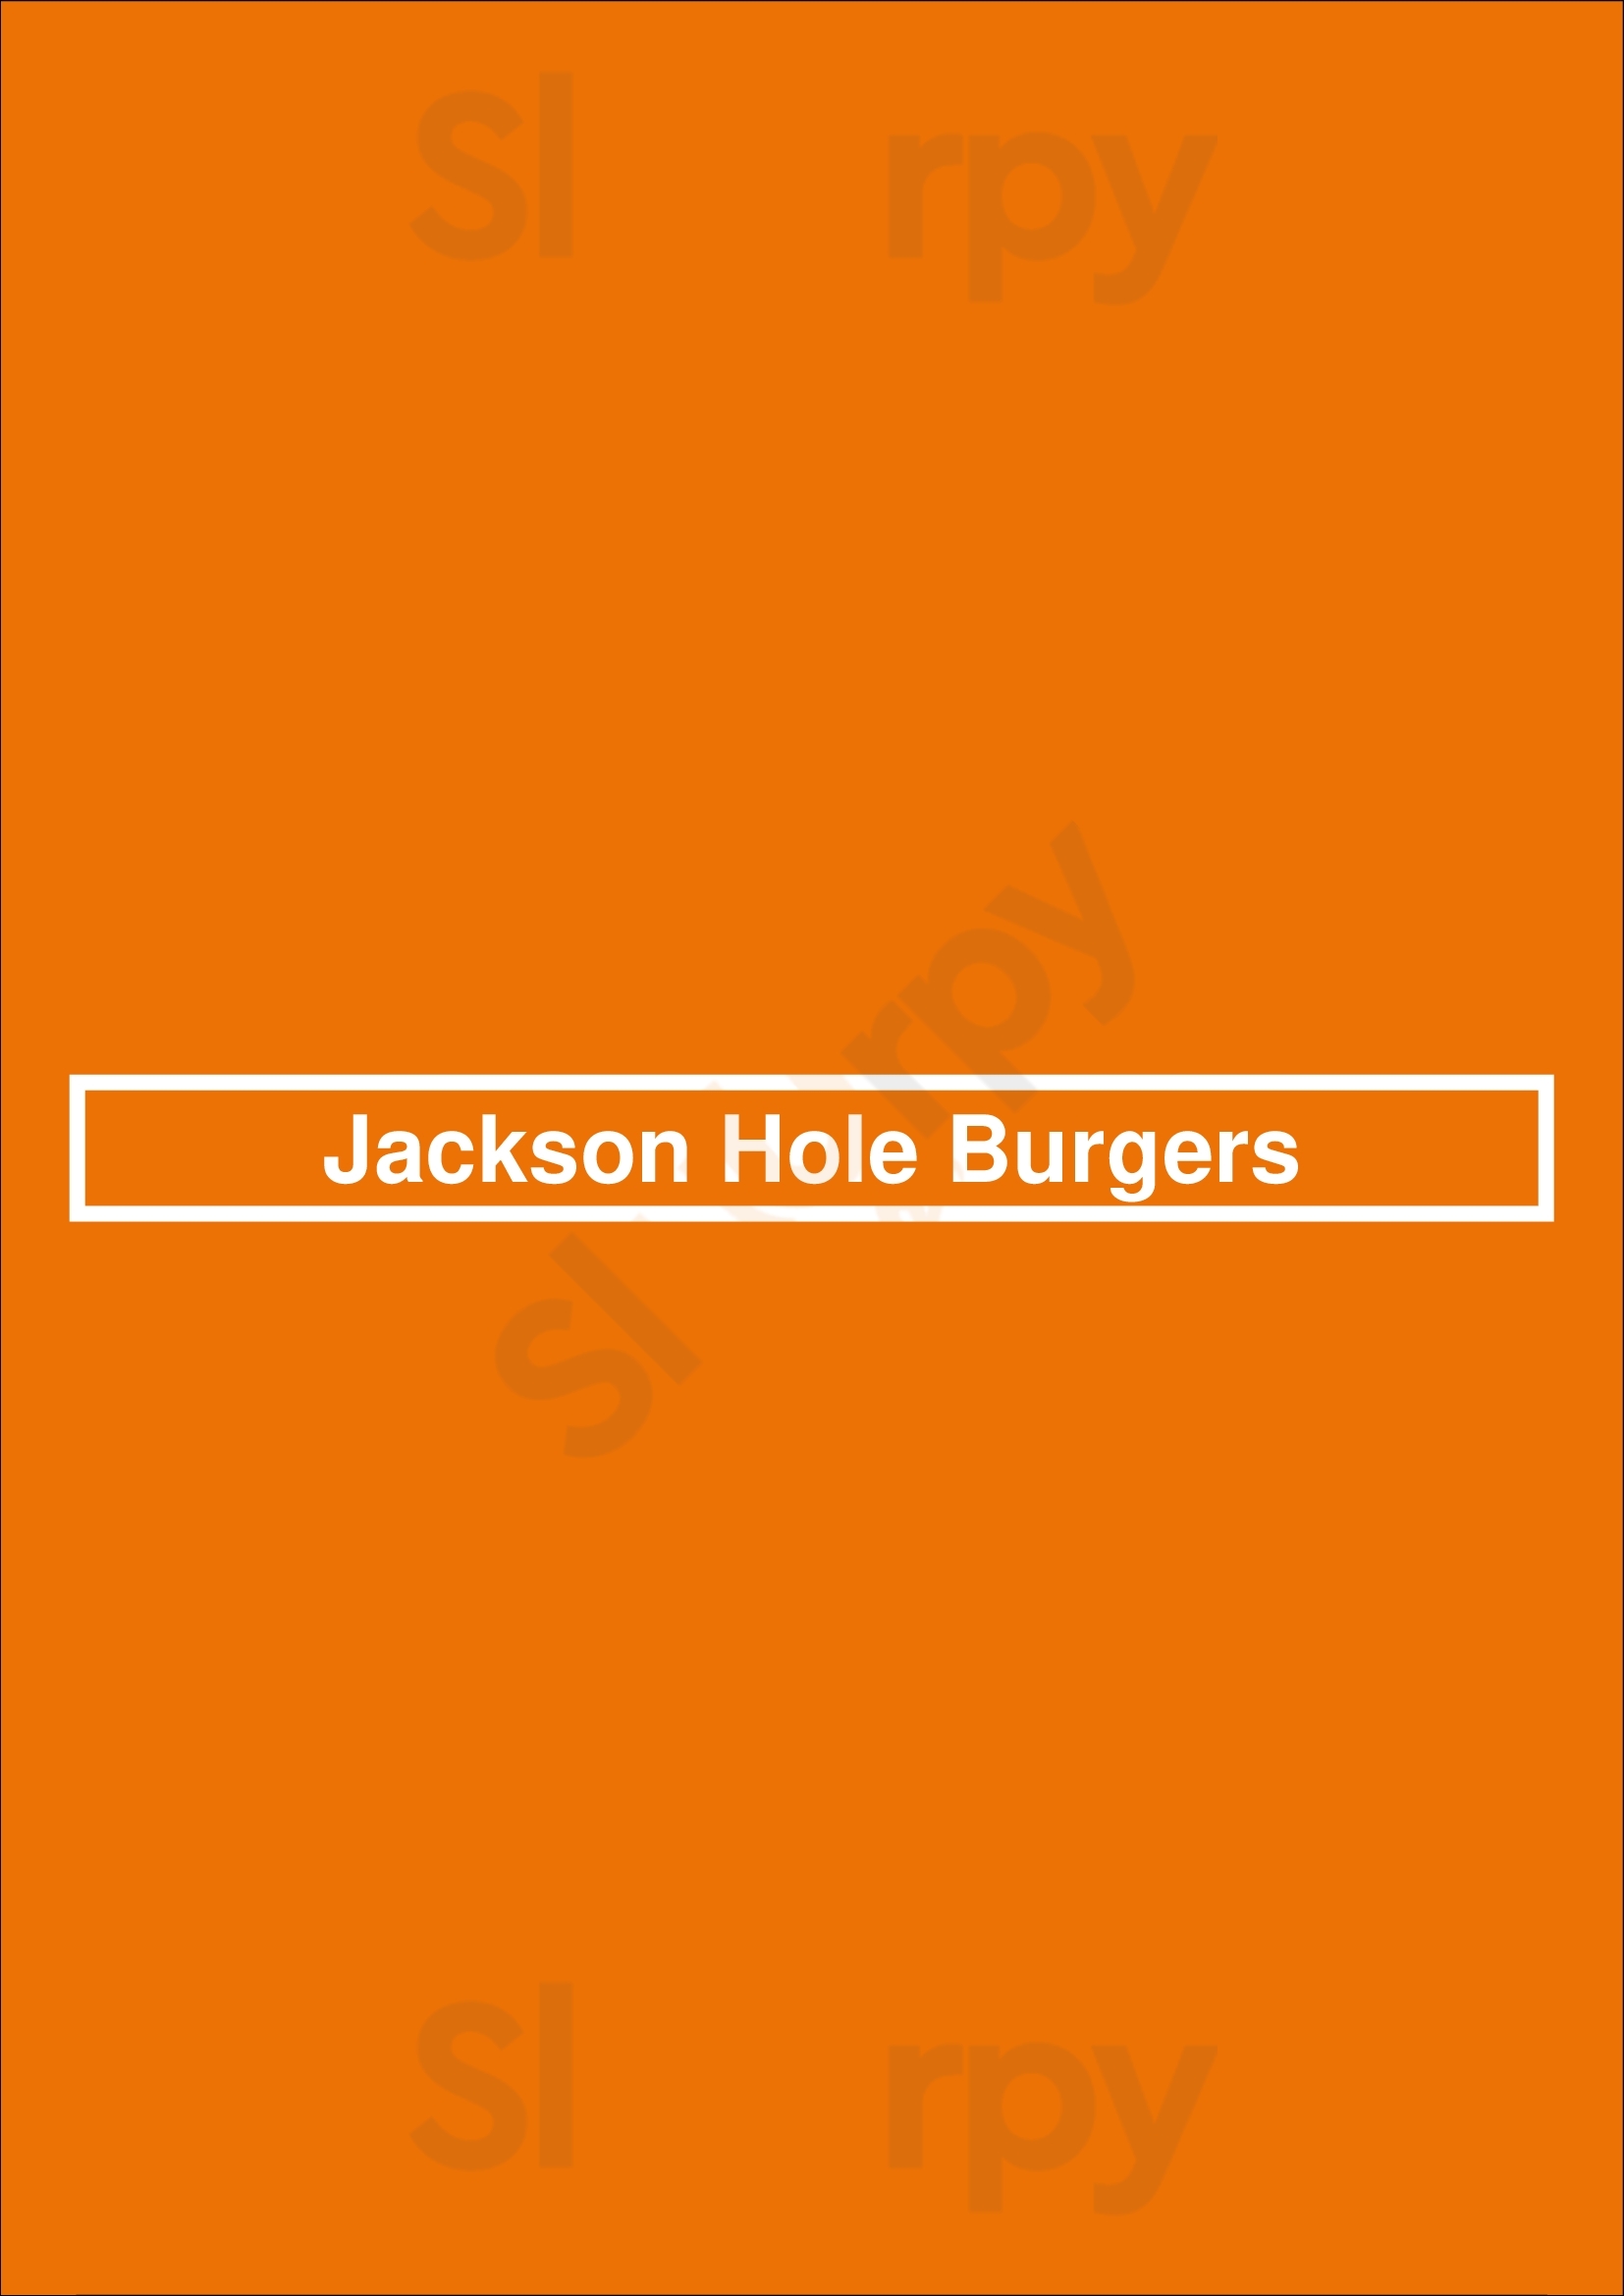 Jackson Hole Burgers New York City Menu - 1